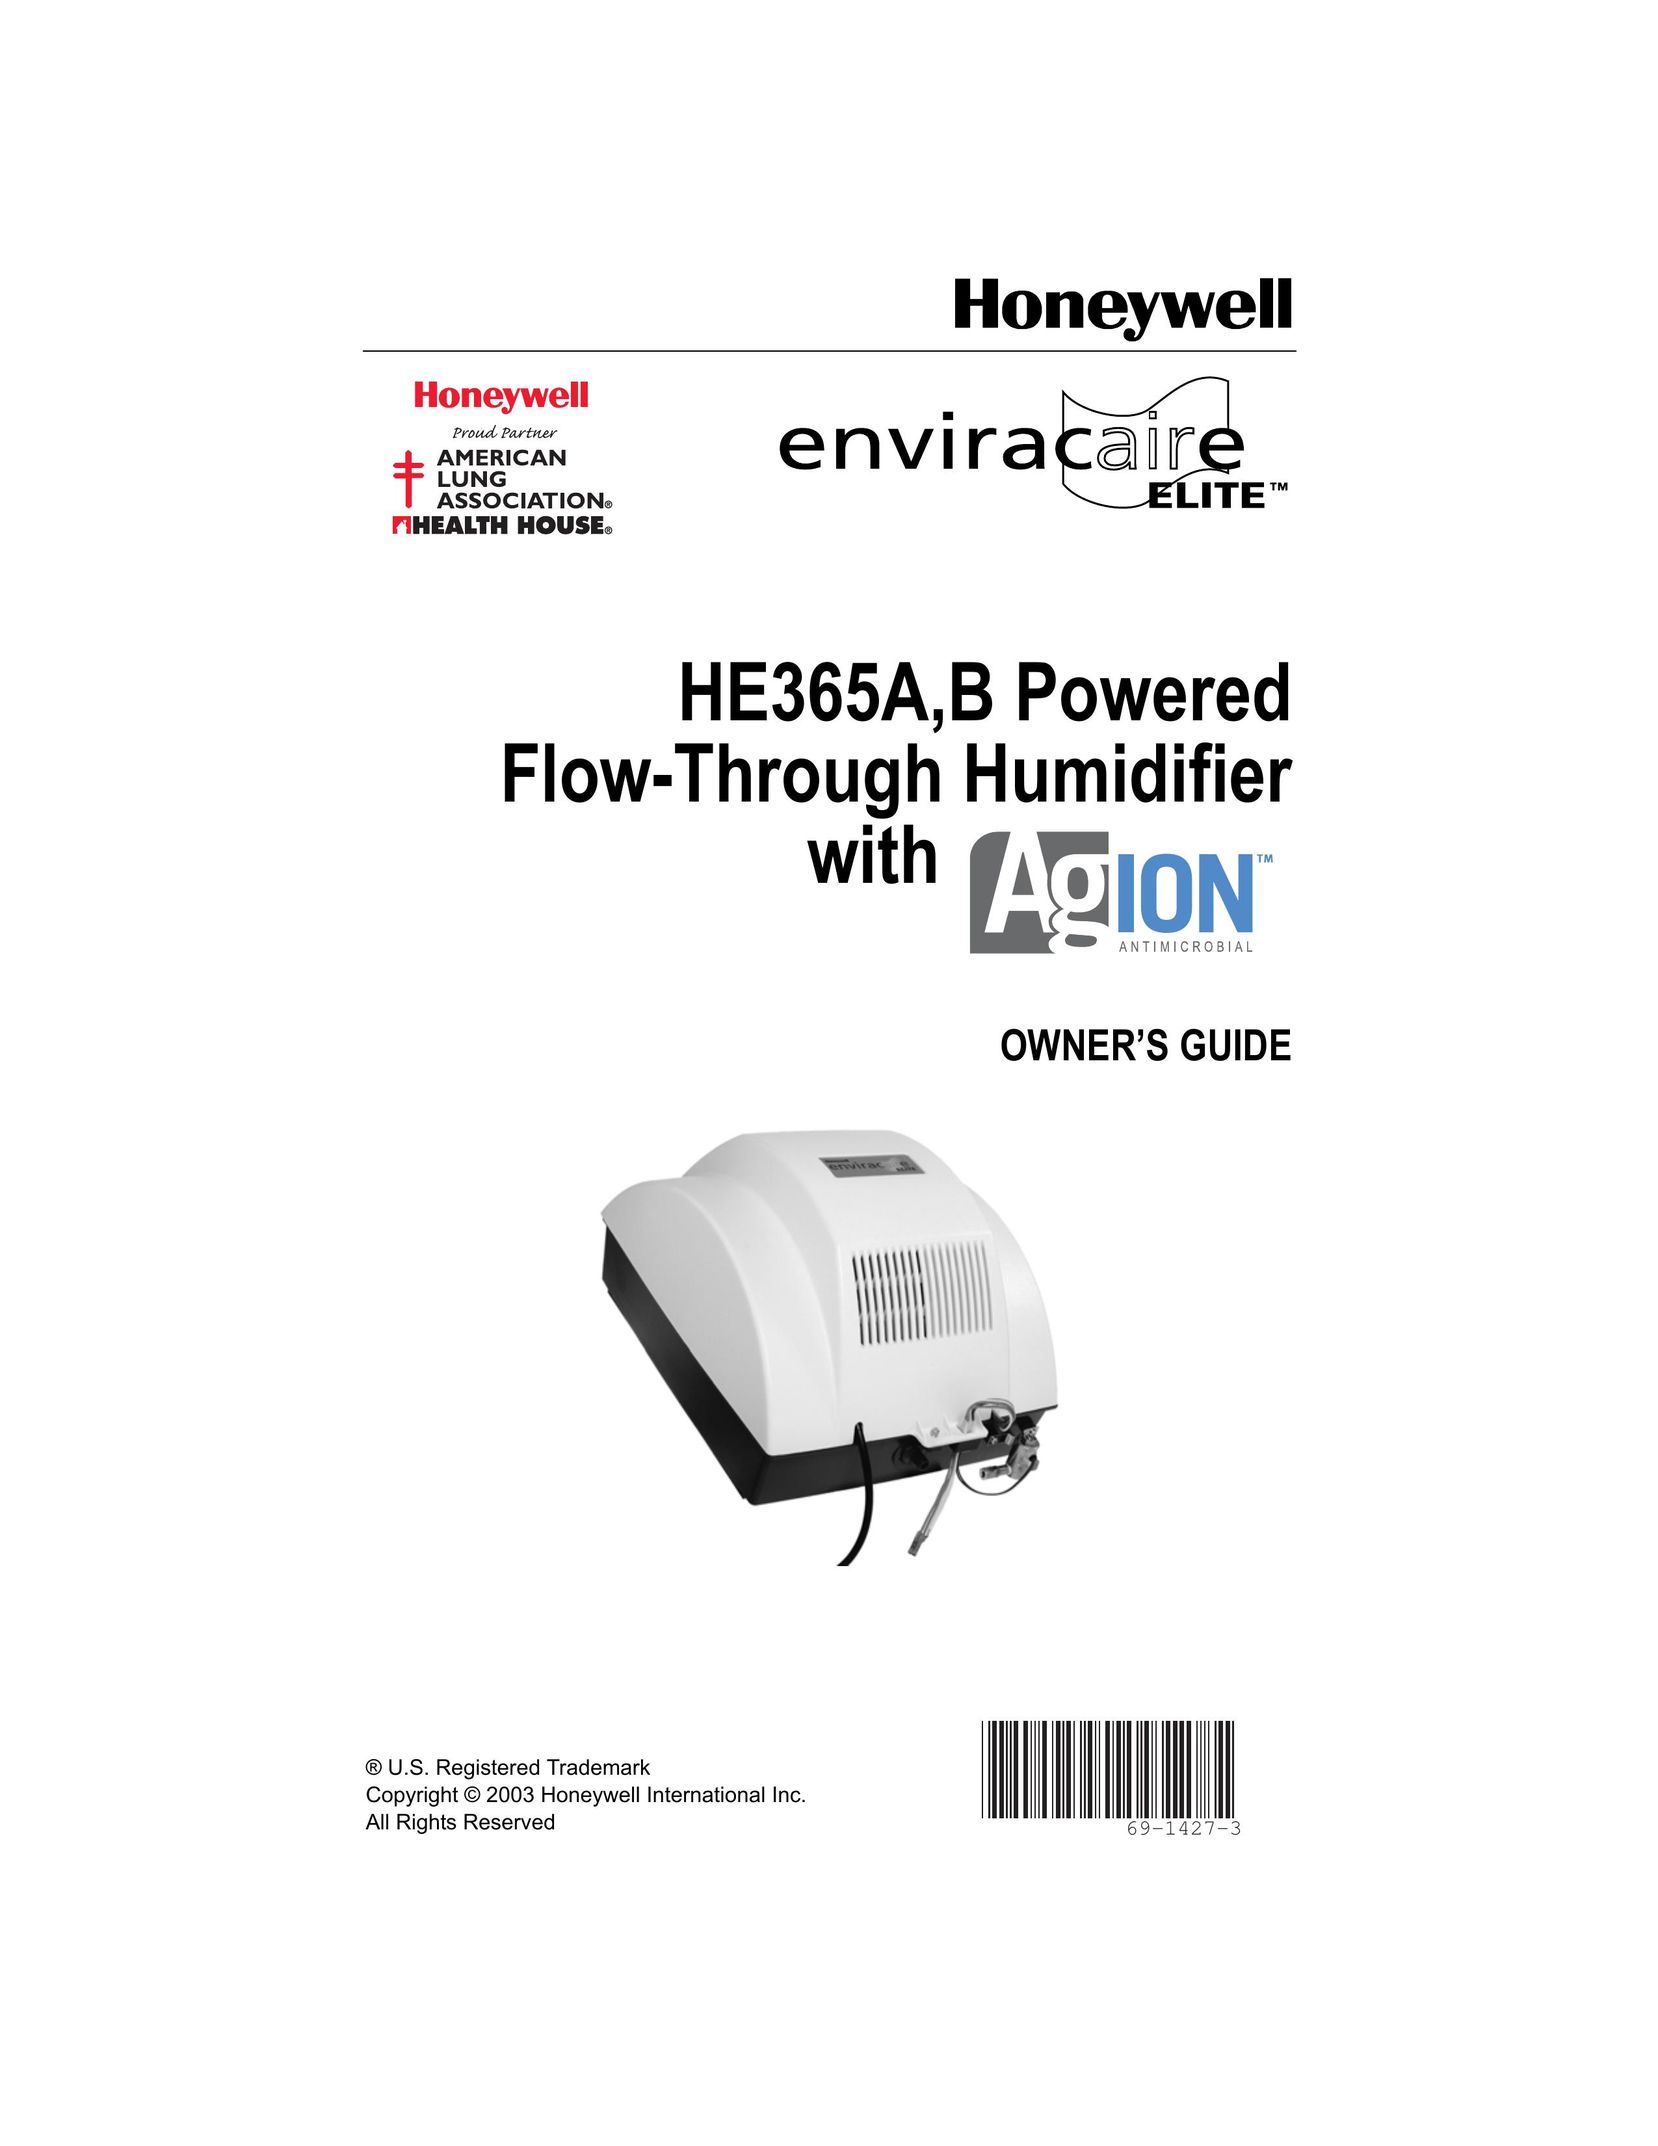 Honeywell HE365B Humidifier User Manual